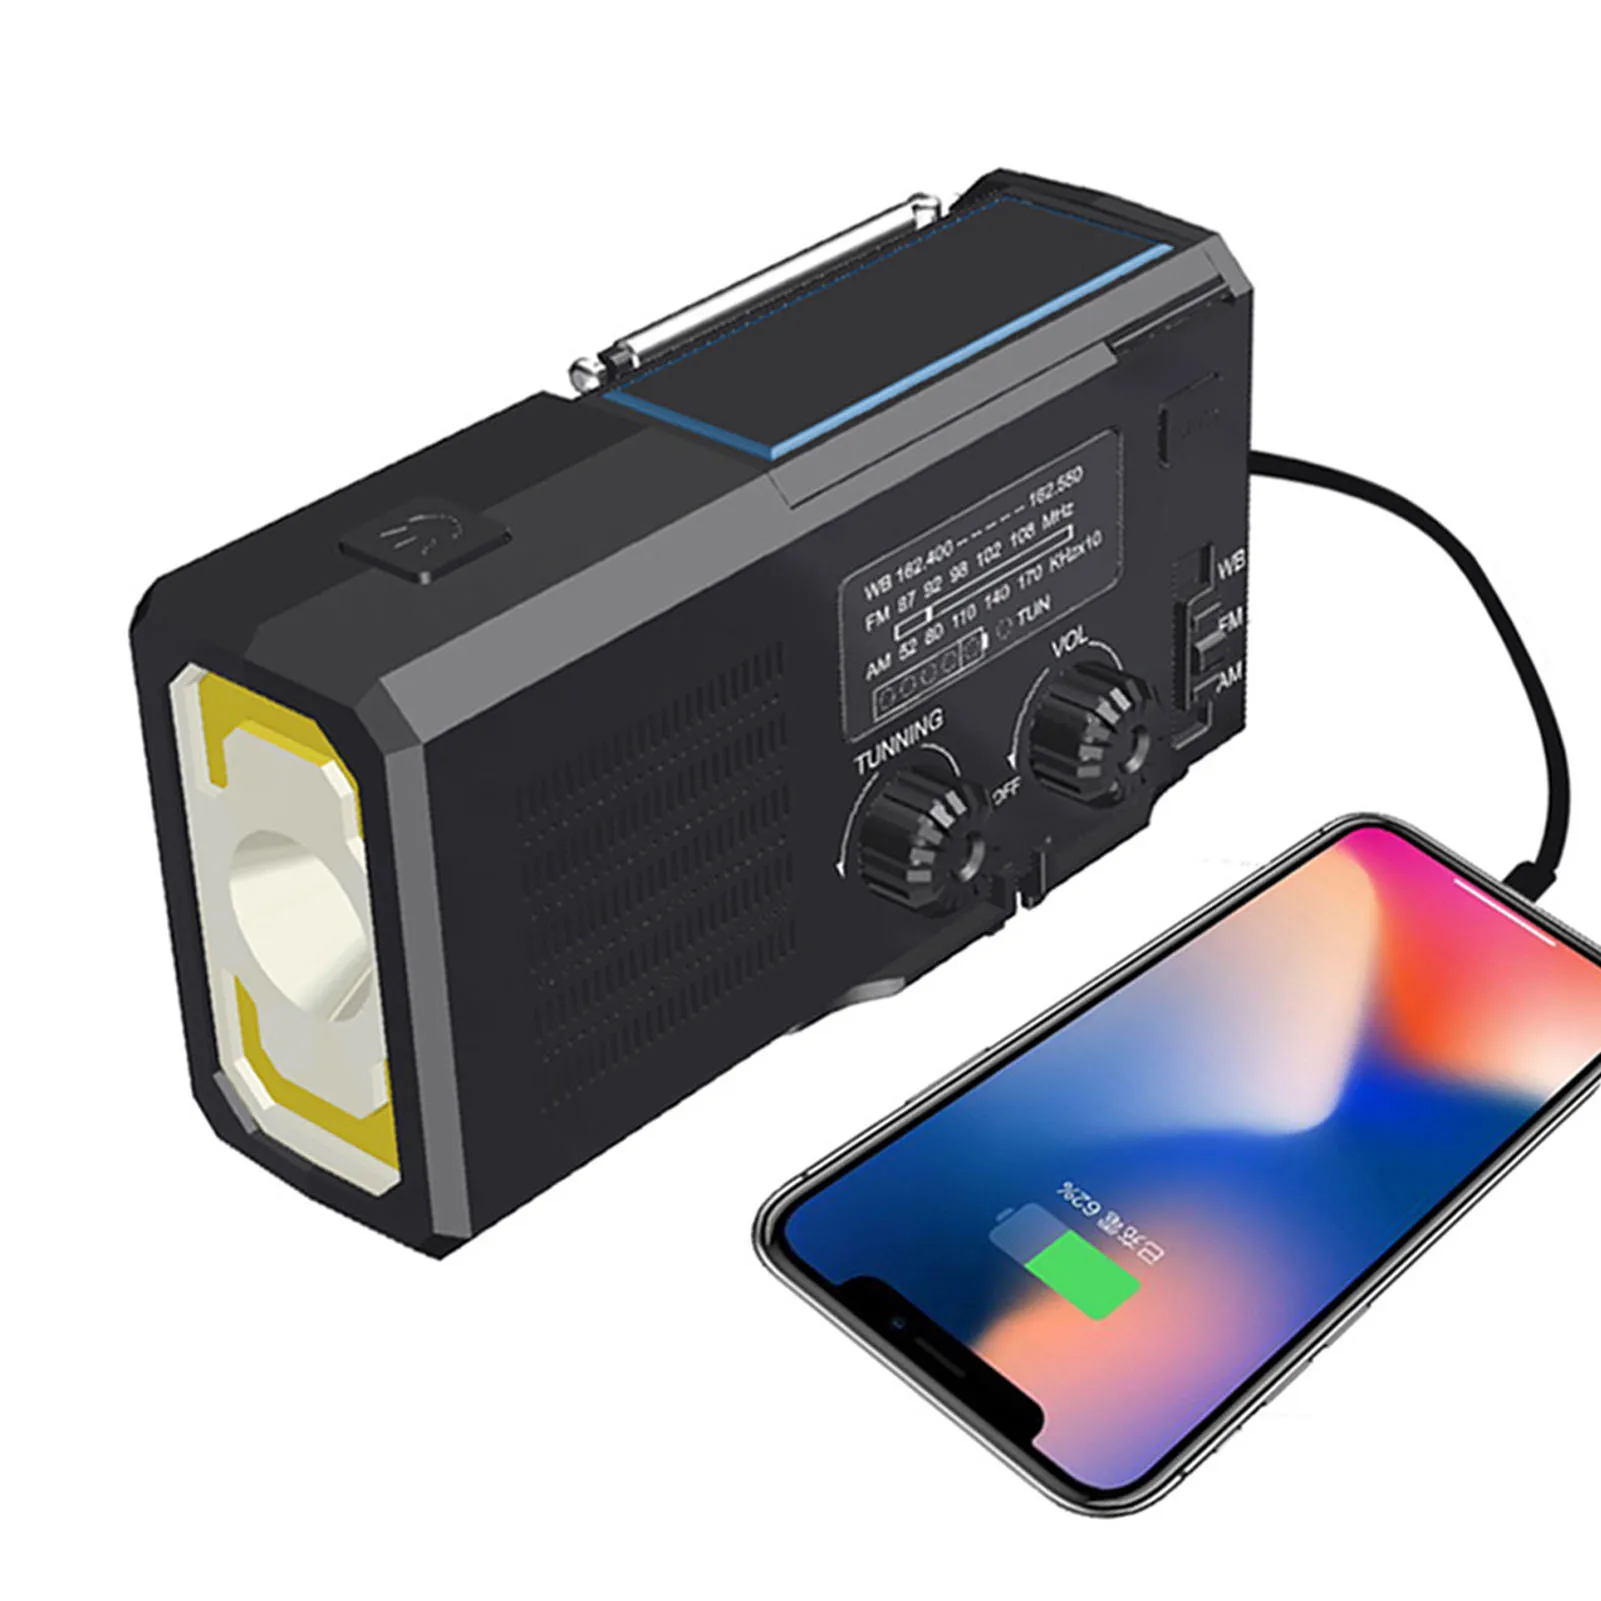 

Emergency Crank Radio Portable Hand Crank Weather Alert Radio AM/FM/NOAA Survival Solar Radios With LED Flashlight SOS Alarm USB